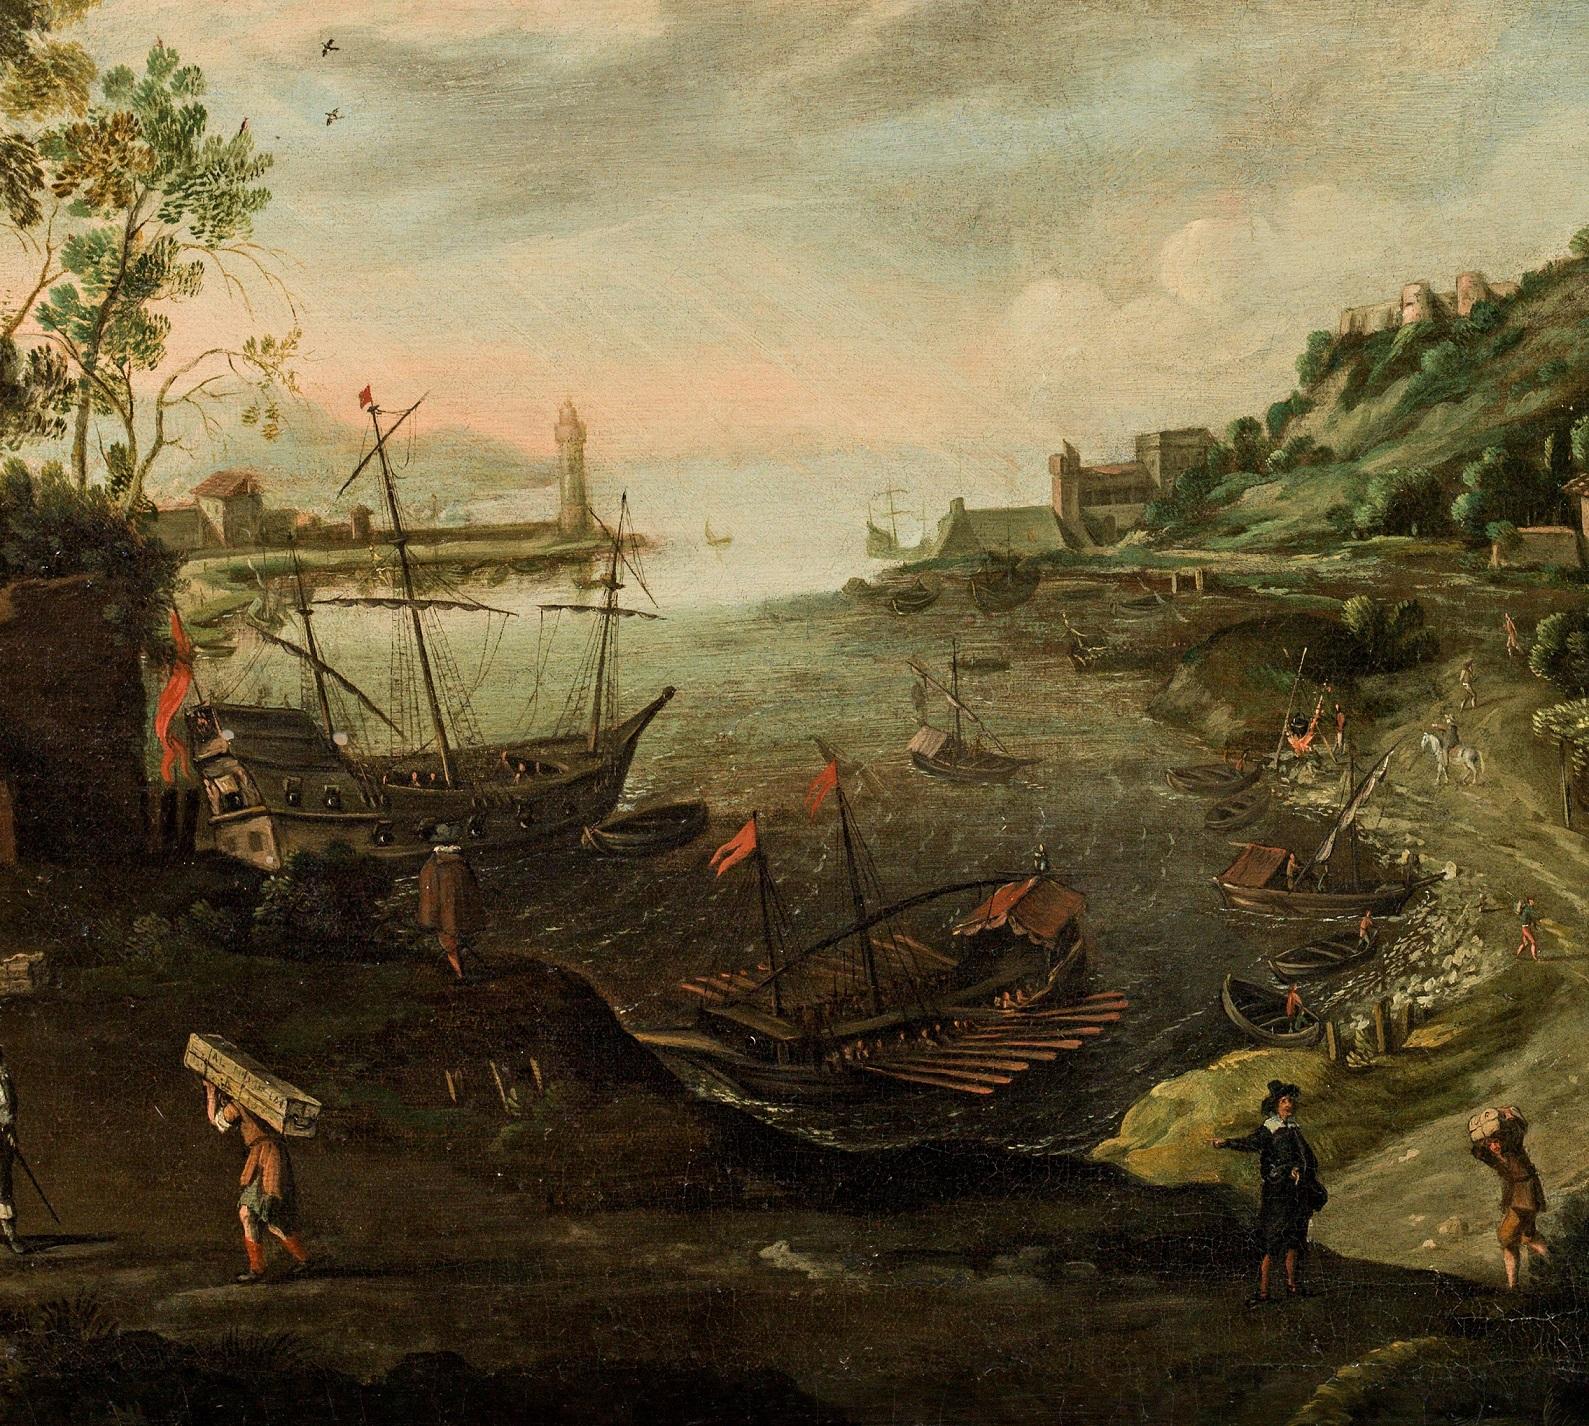 Sea Landscape Valckenborch Paint Oil on canvas Old master 17th Century Flemish - Old Masters Painting by Marten van Valckenborch (Belgium 1535 - Frankfurt 1612)